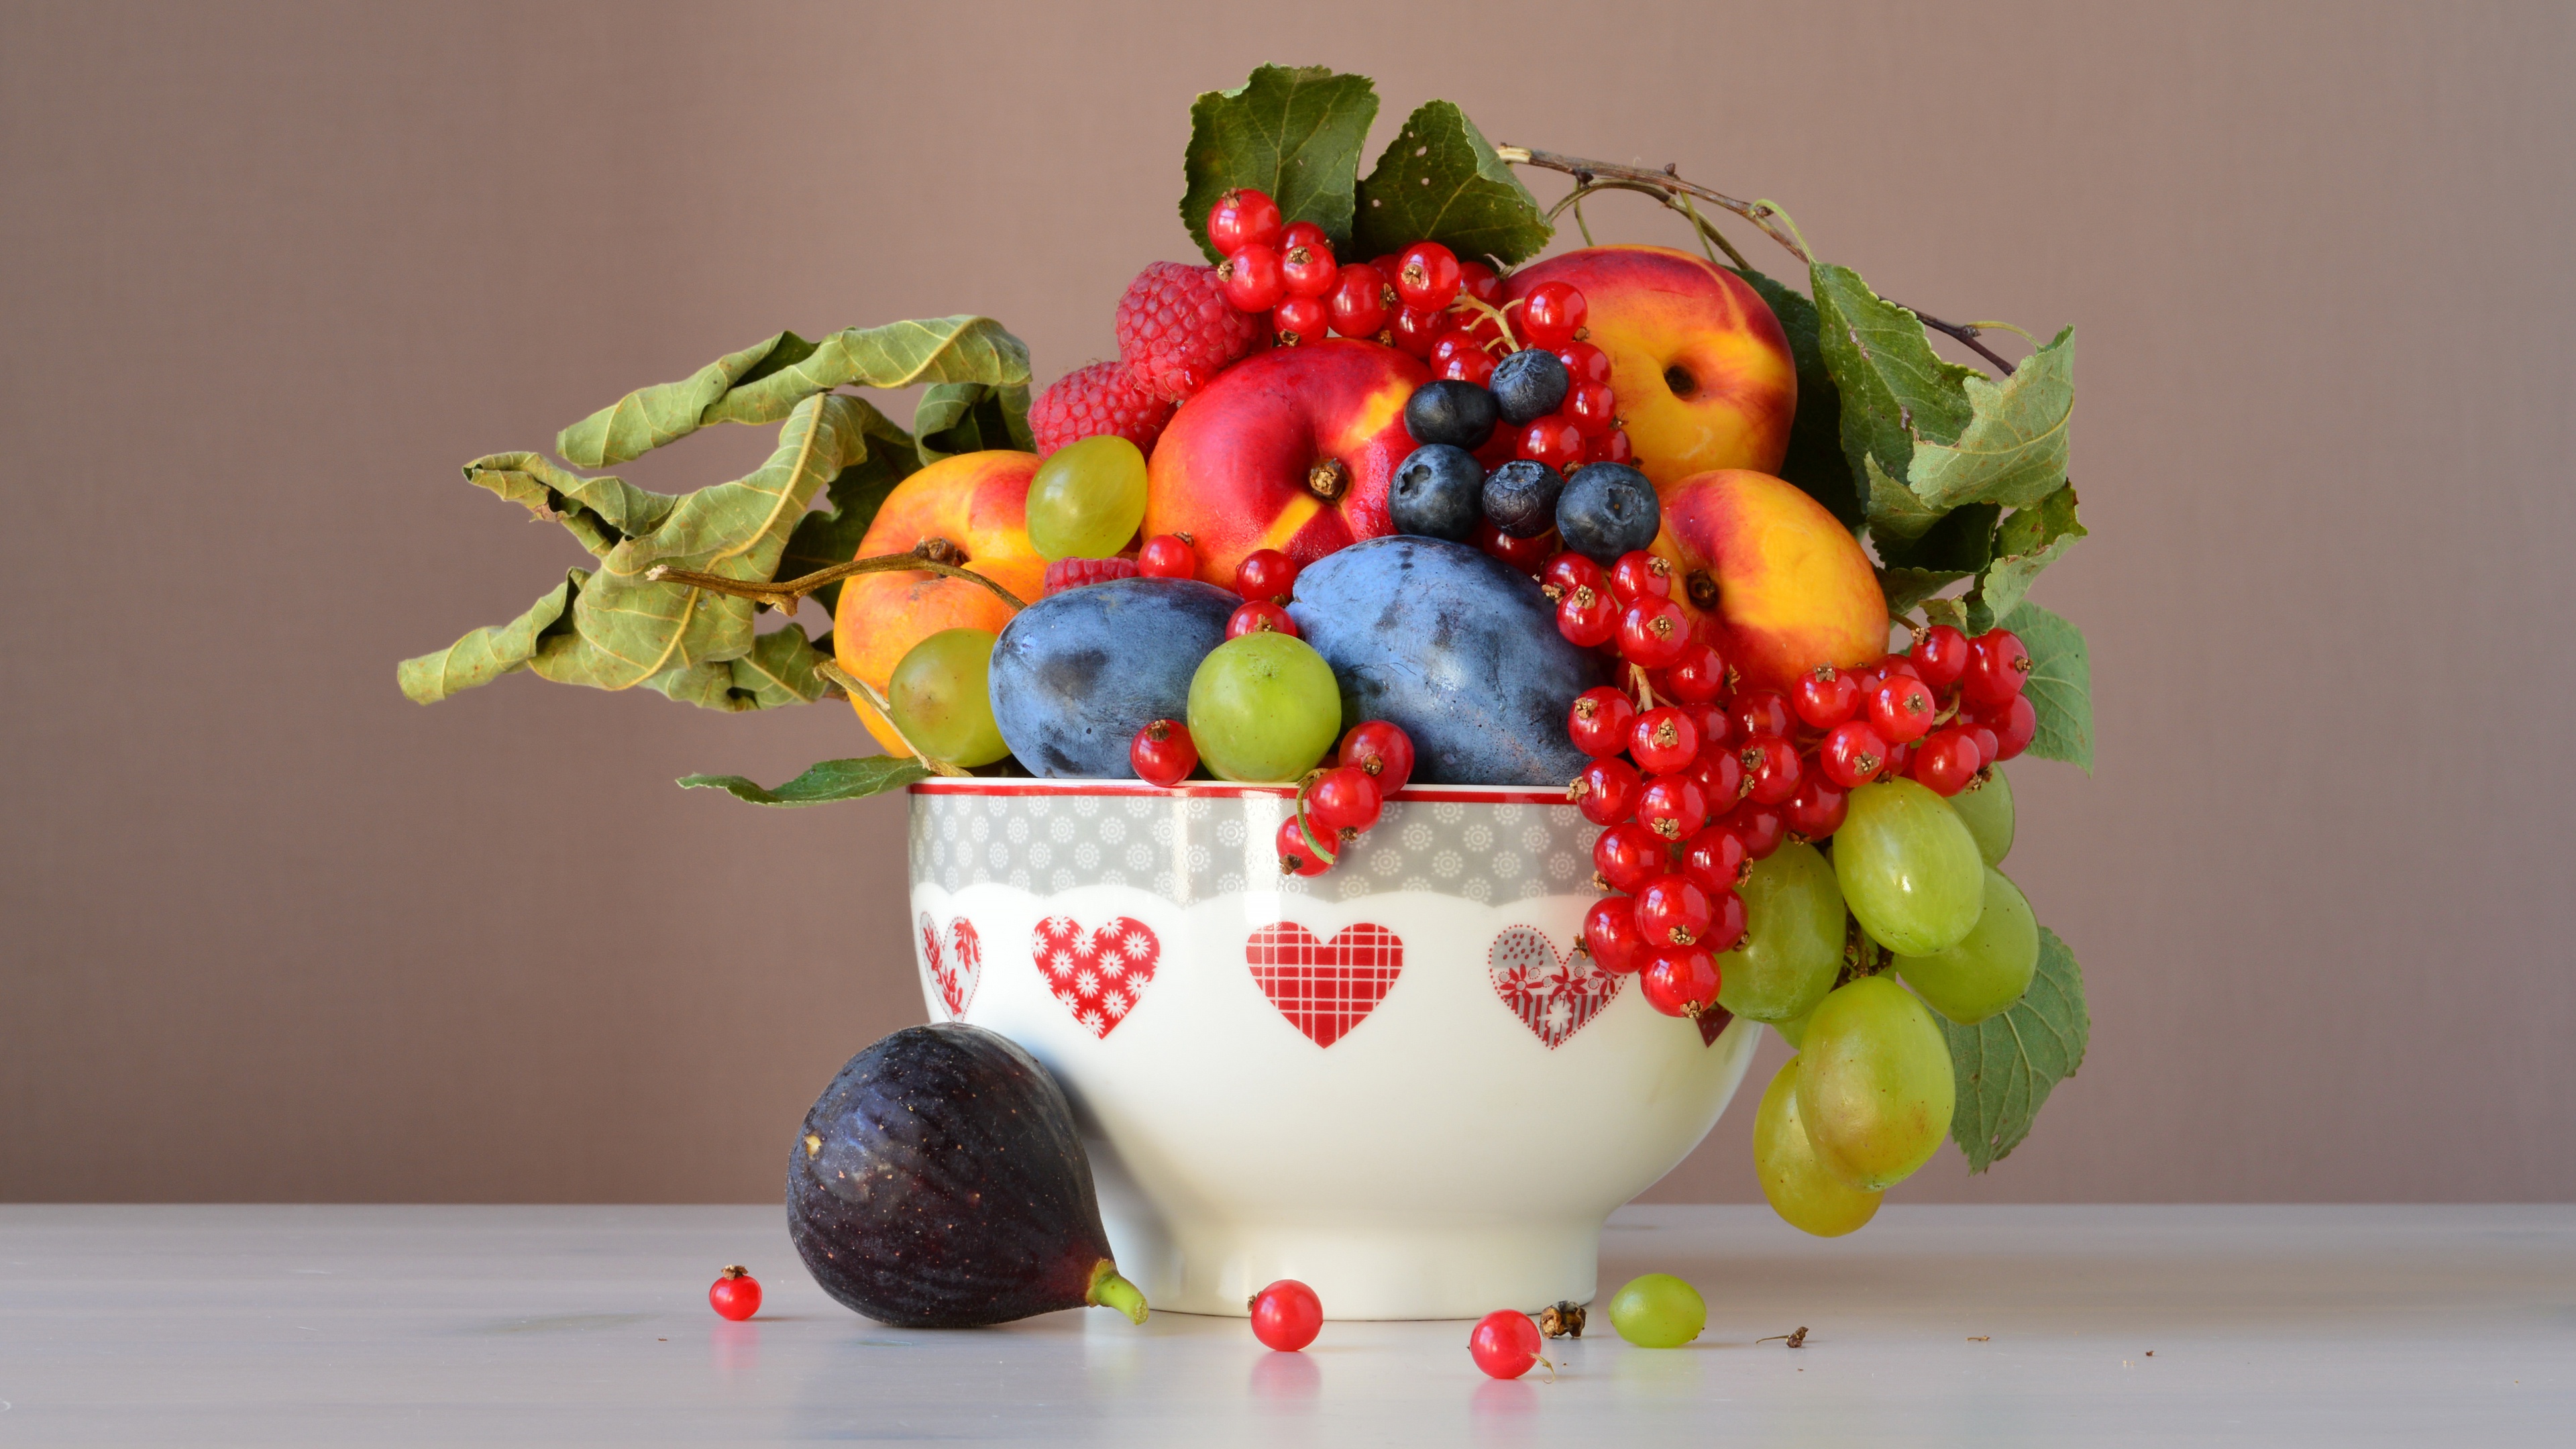 В вазе лежат 4 разных фрукта. Ваза с фруктами. Натюрморт с фруктами. Натюрморт с цветами и фруктами. Натюрморт ваза с фруктами.